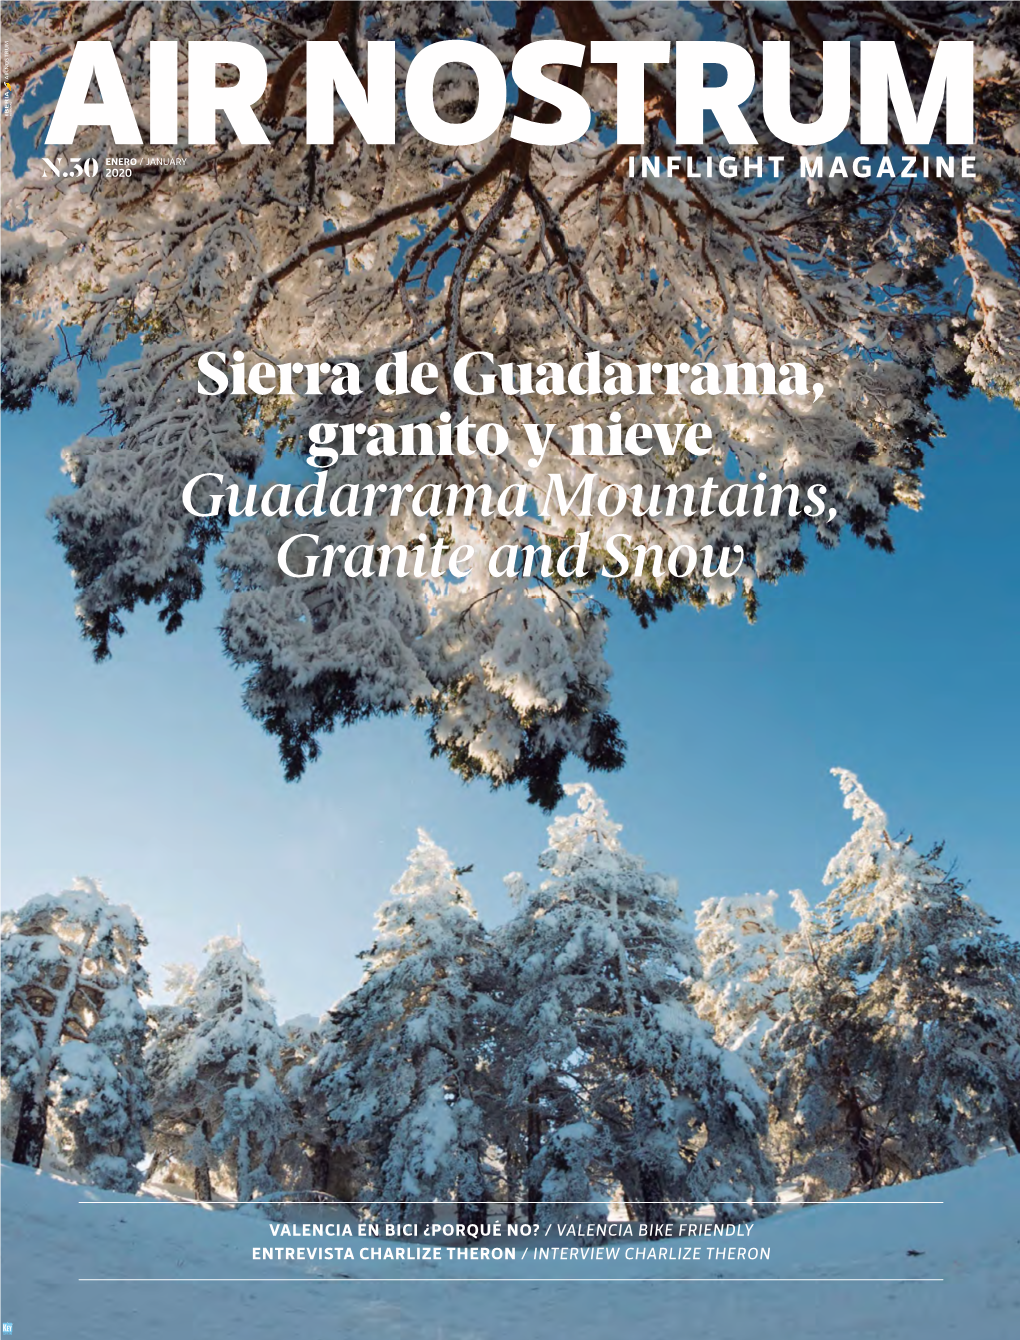 Sierra De Guadarrama, Granito Y Nieve Guadarrama Mountains, Granite and Snow